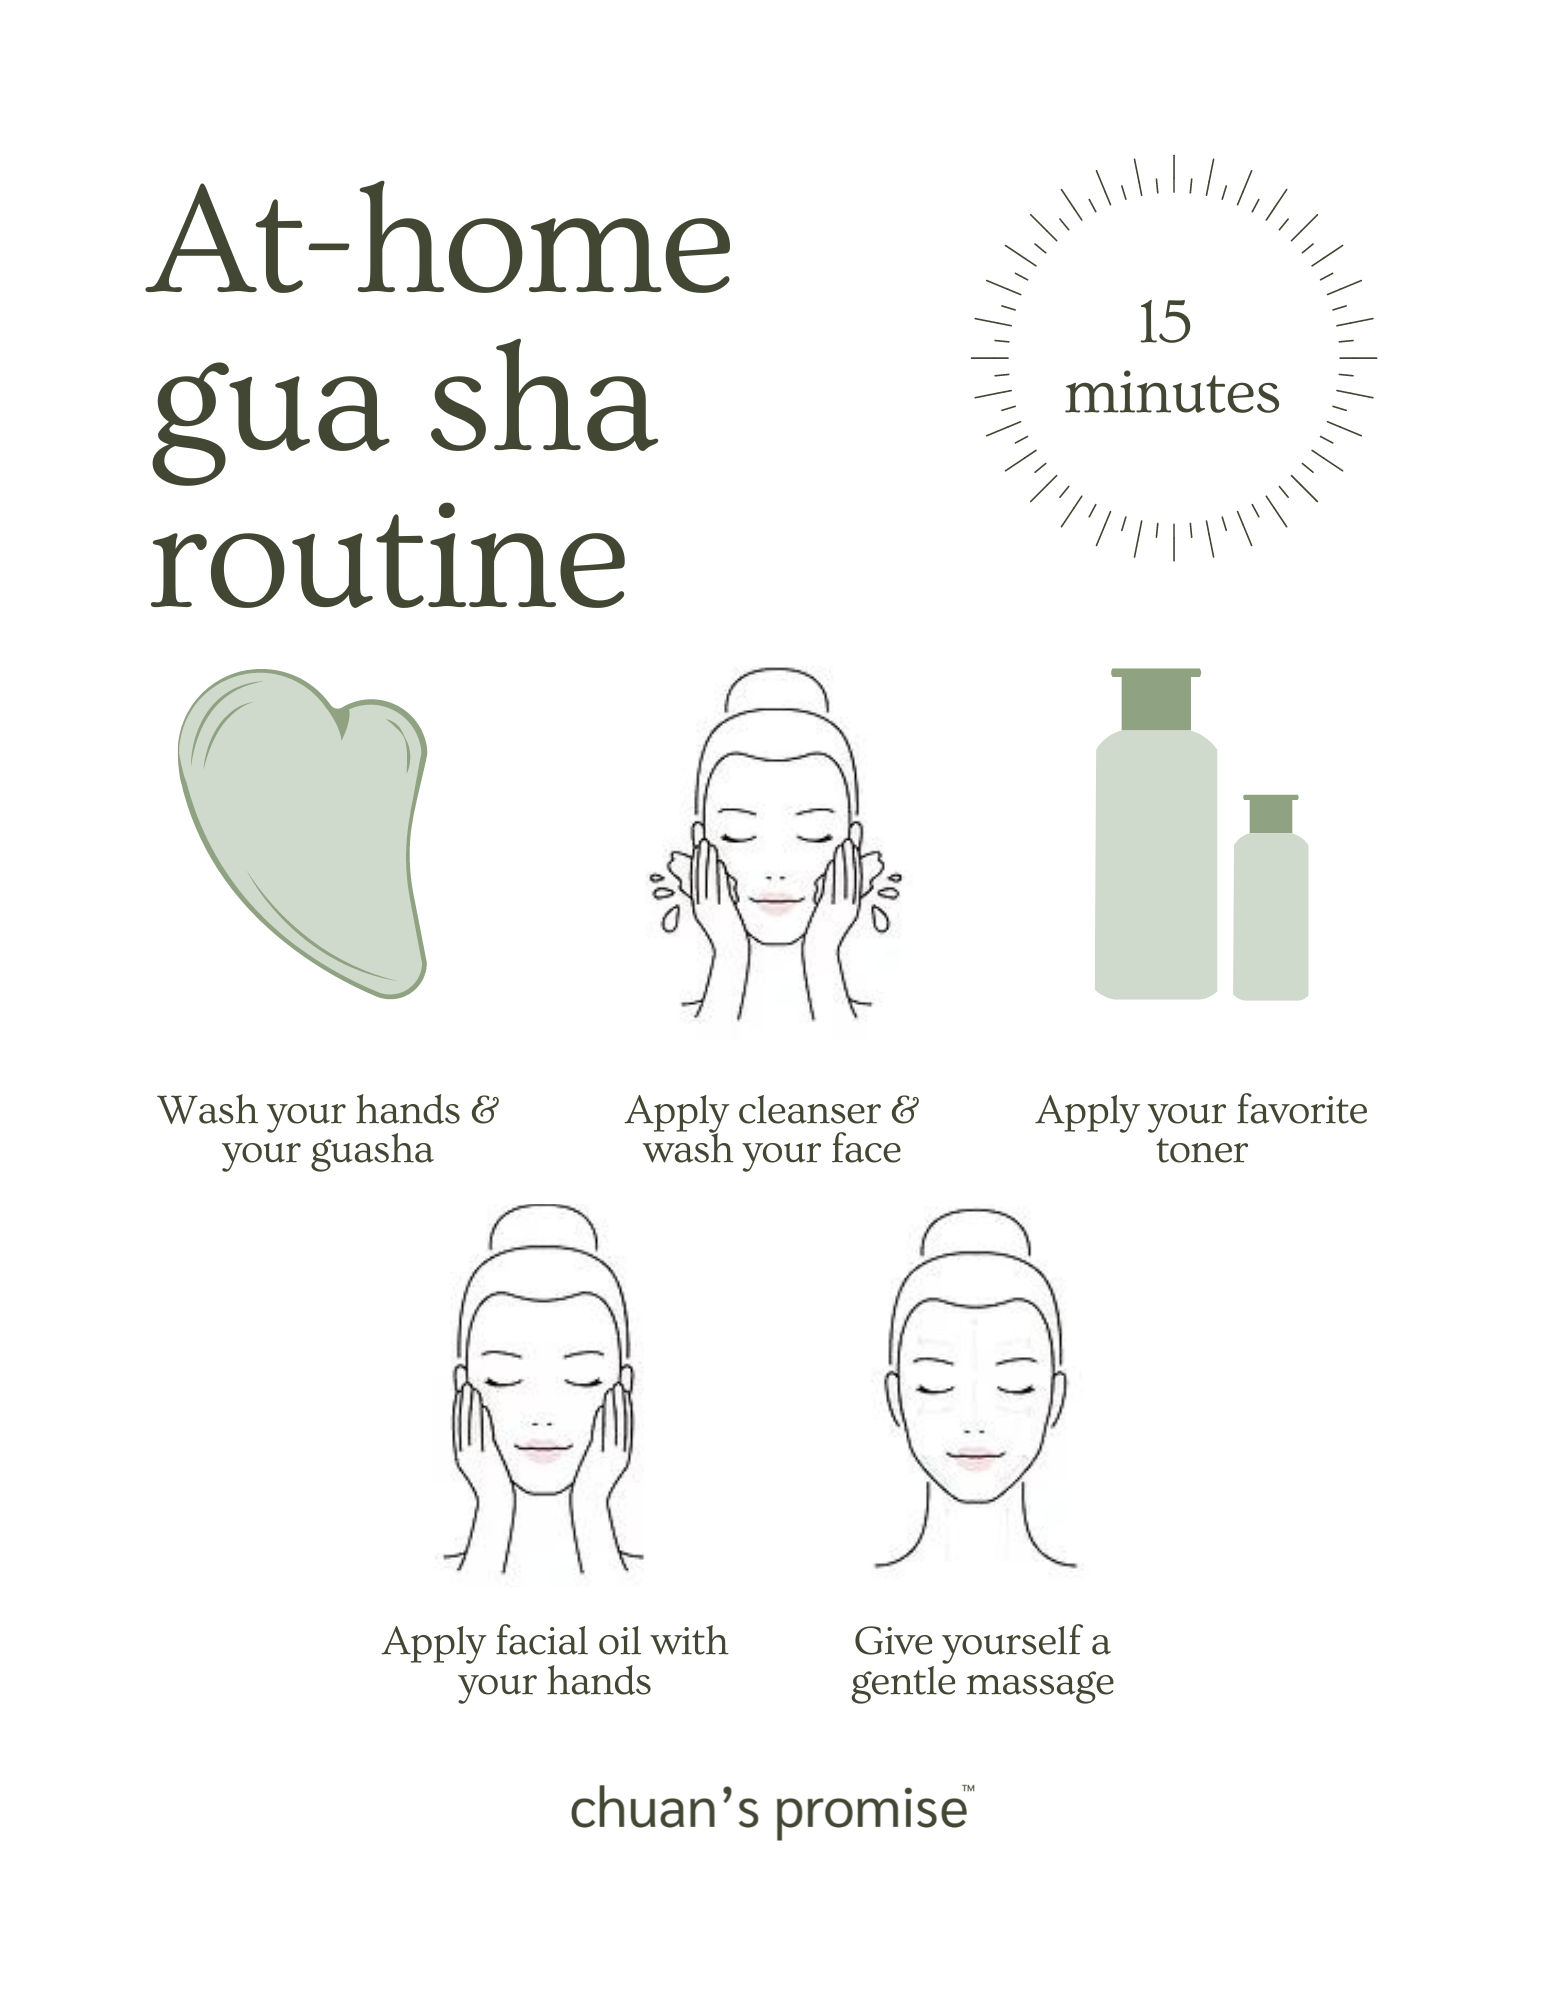 At-home gua sha 5-step routine illustration